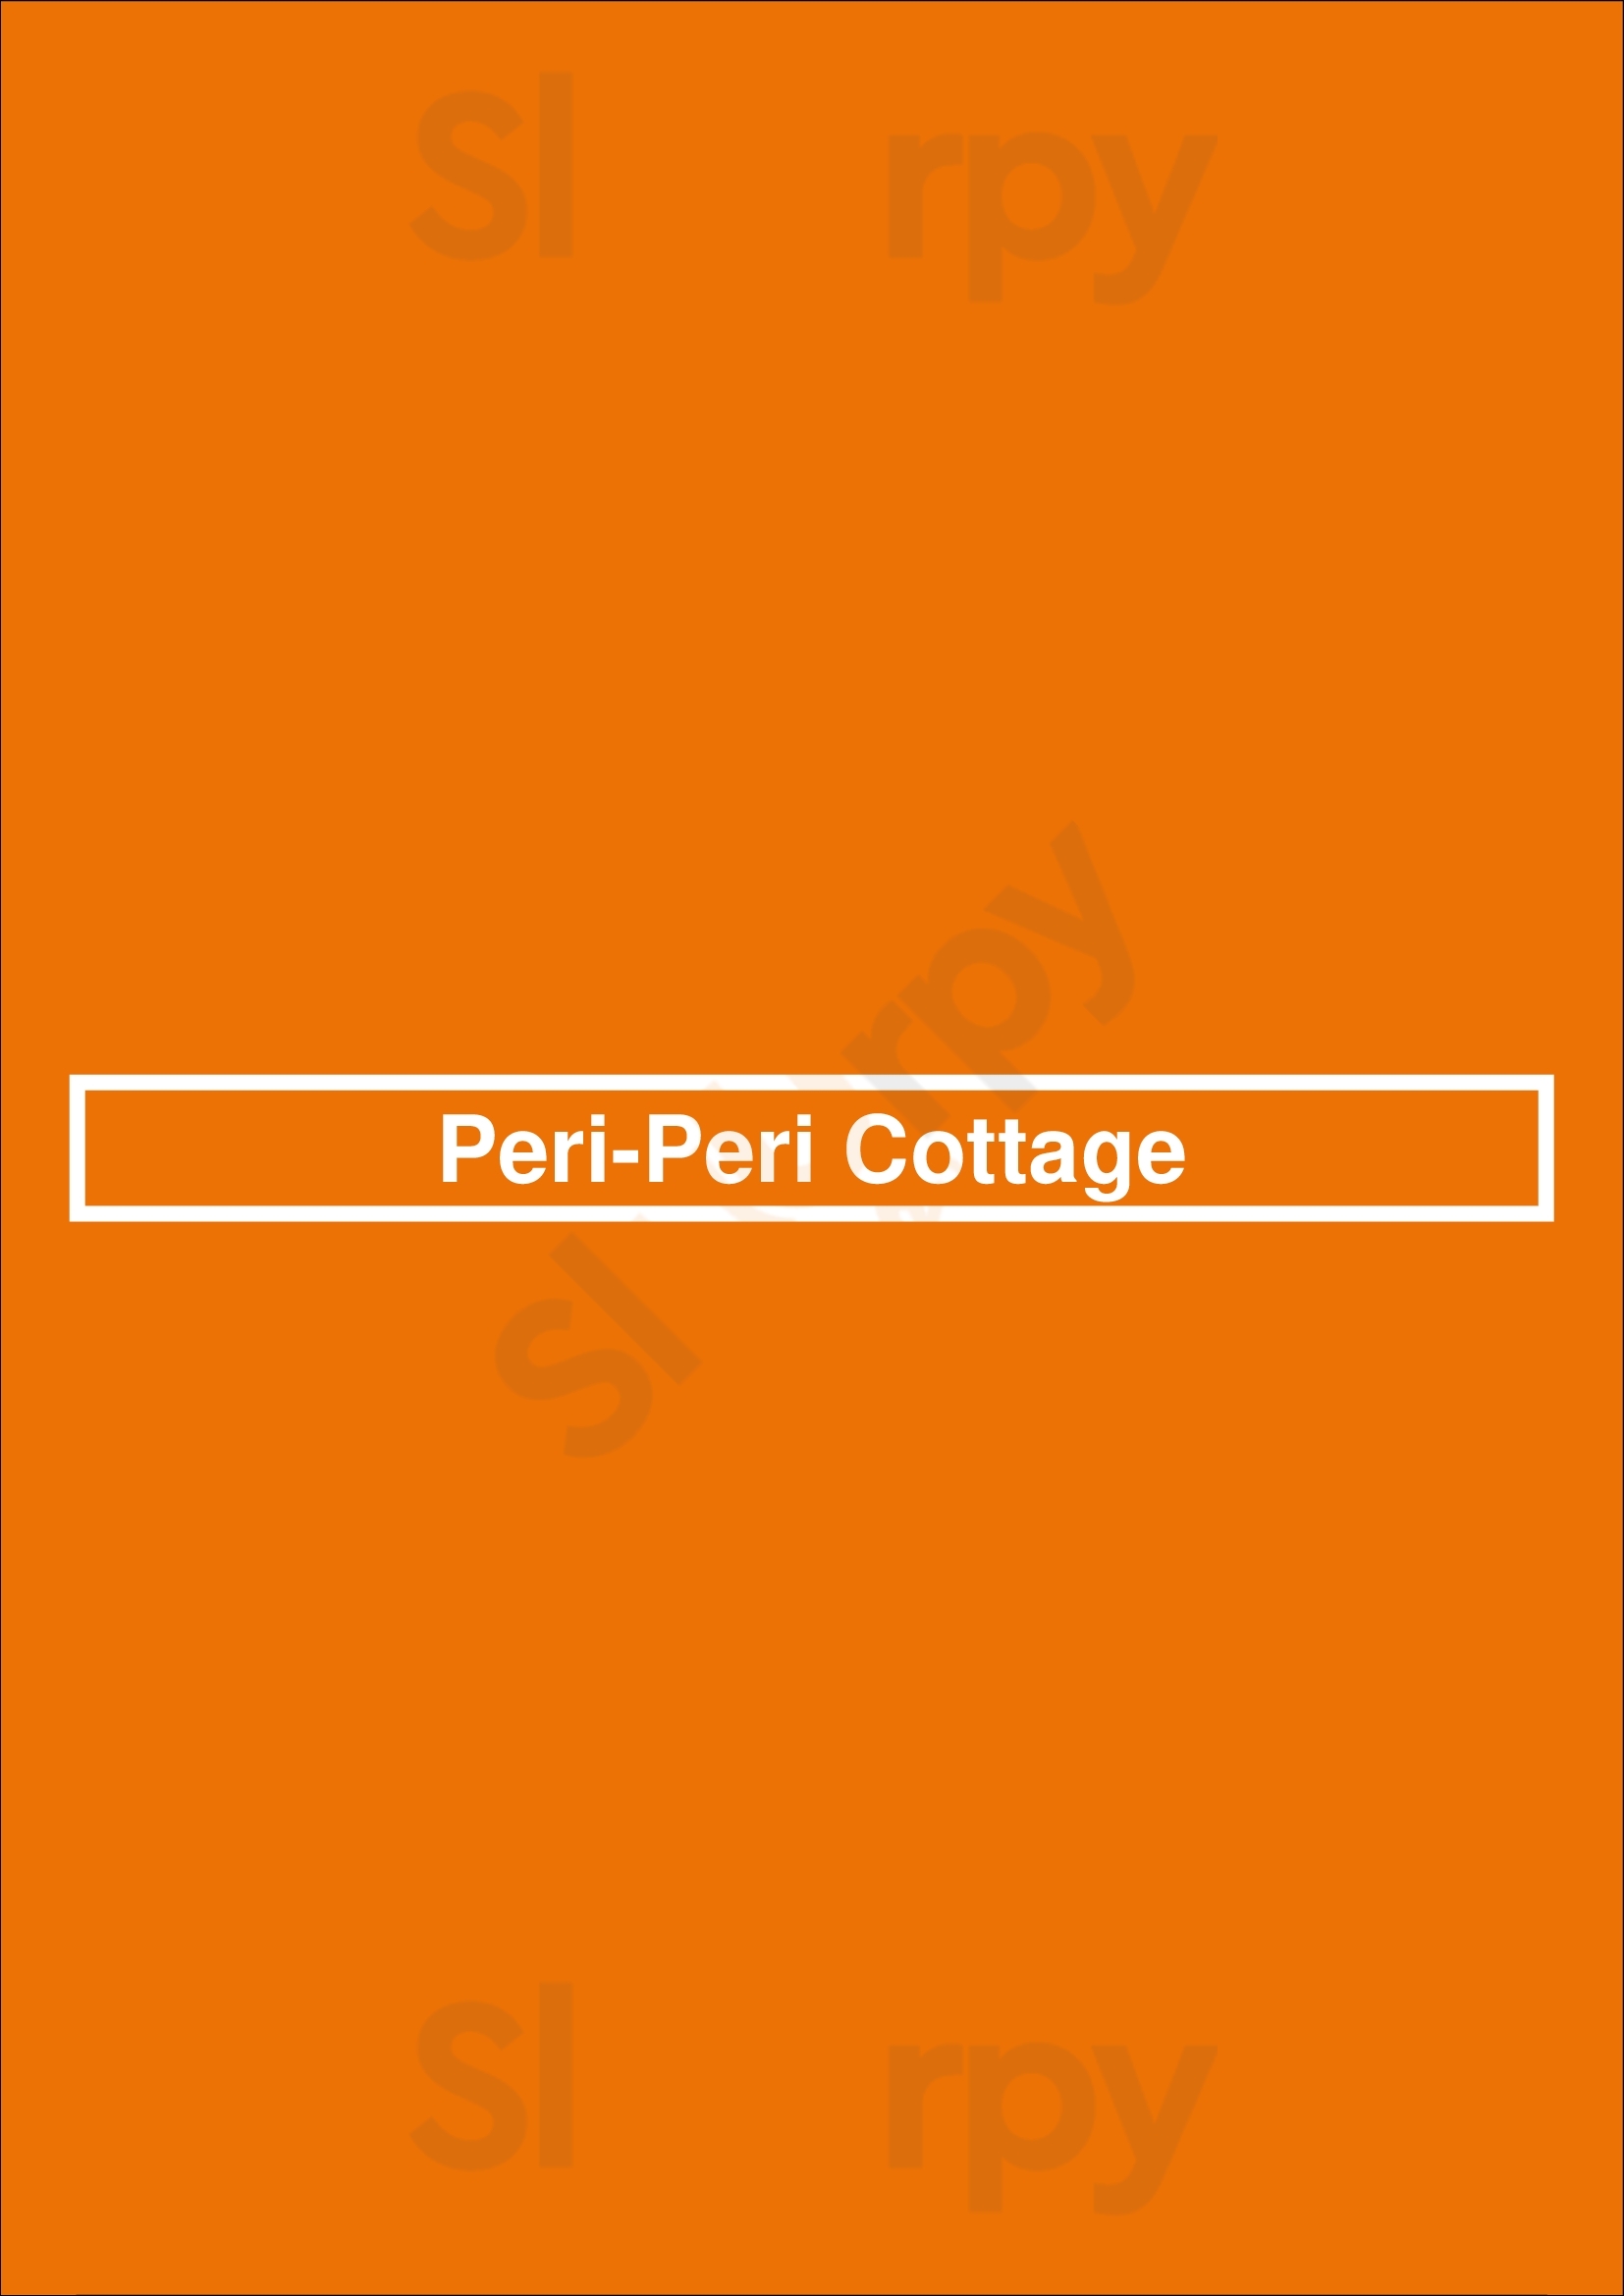 Peri-peri Cottage Uxbridge Menu - 1